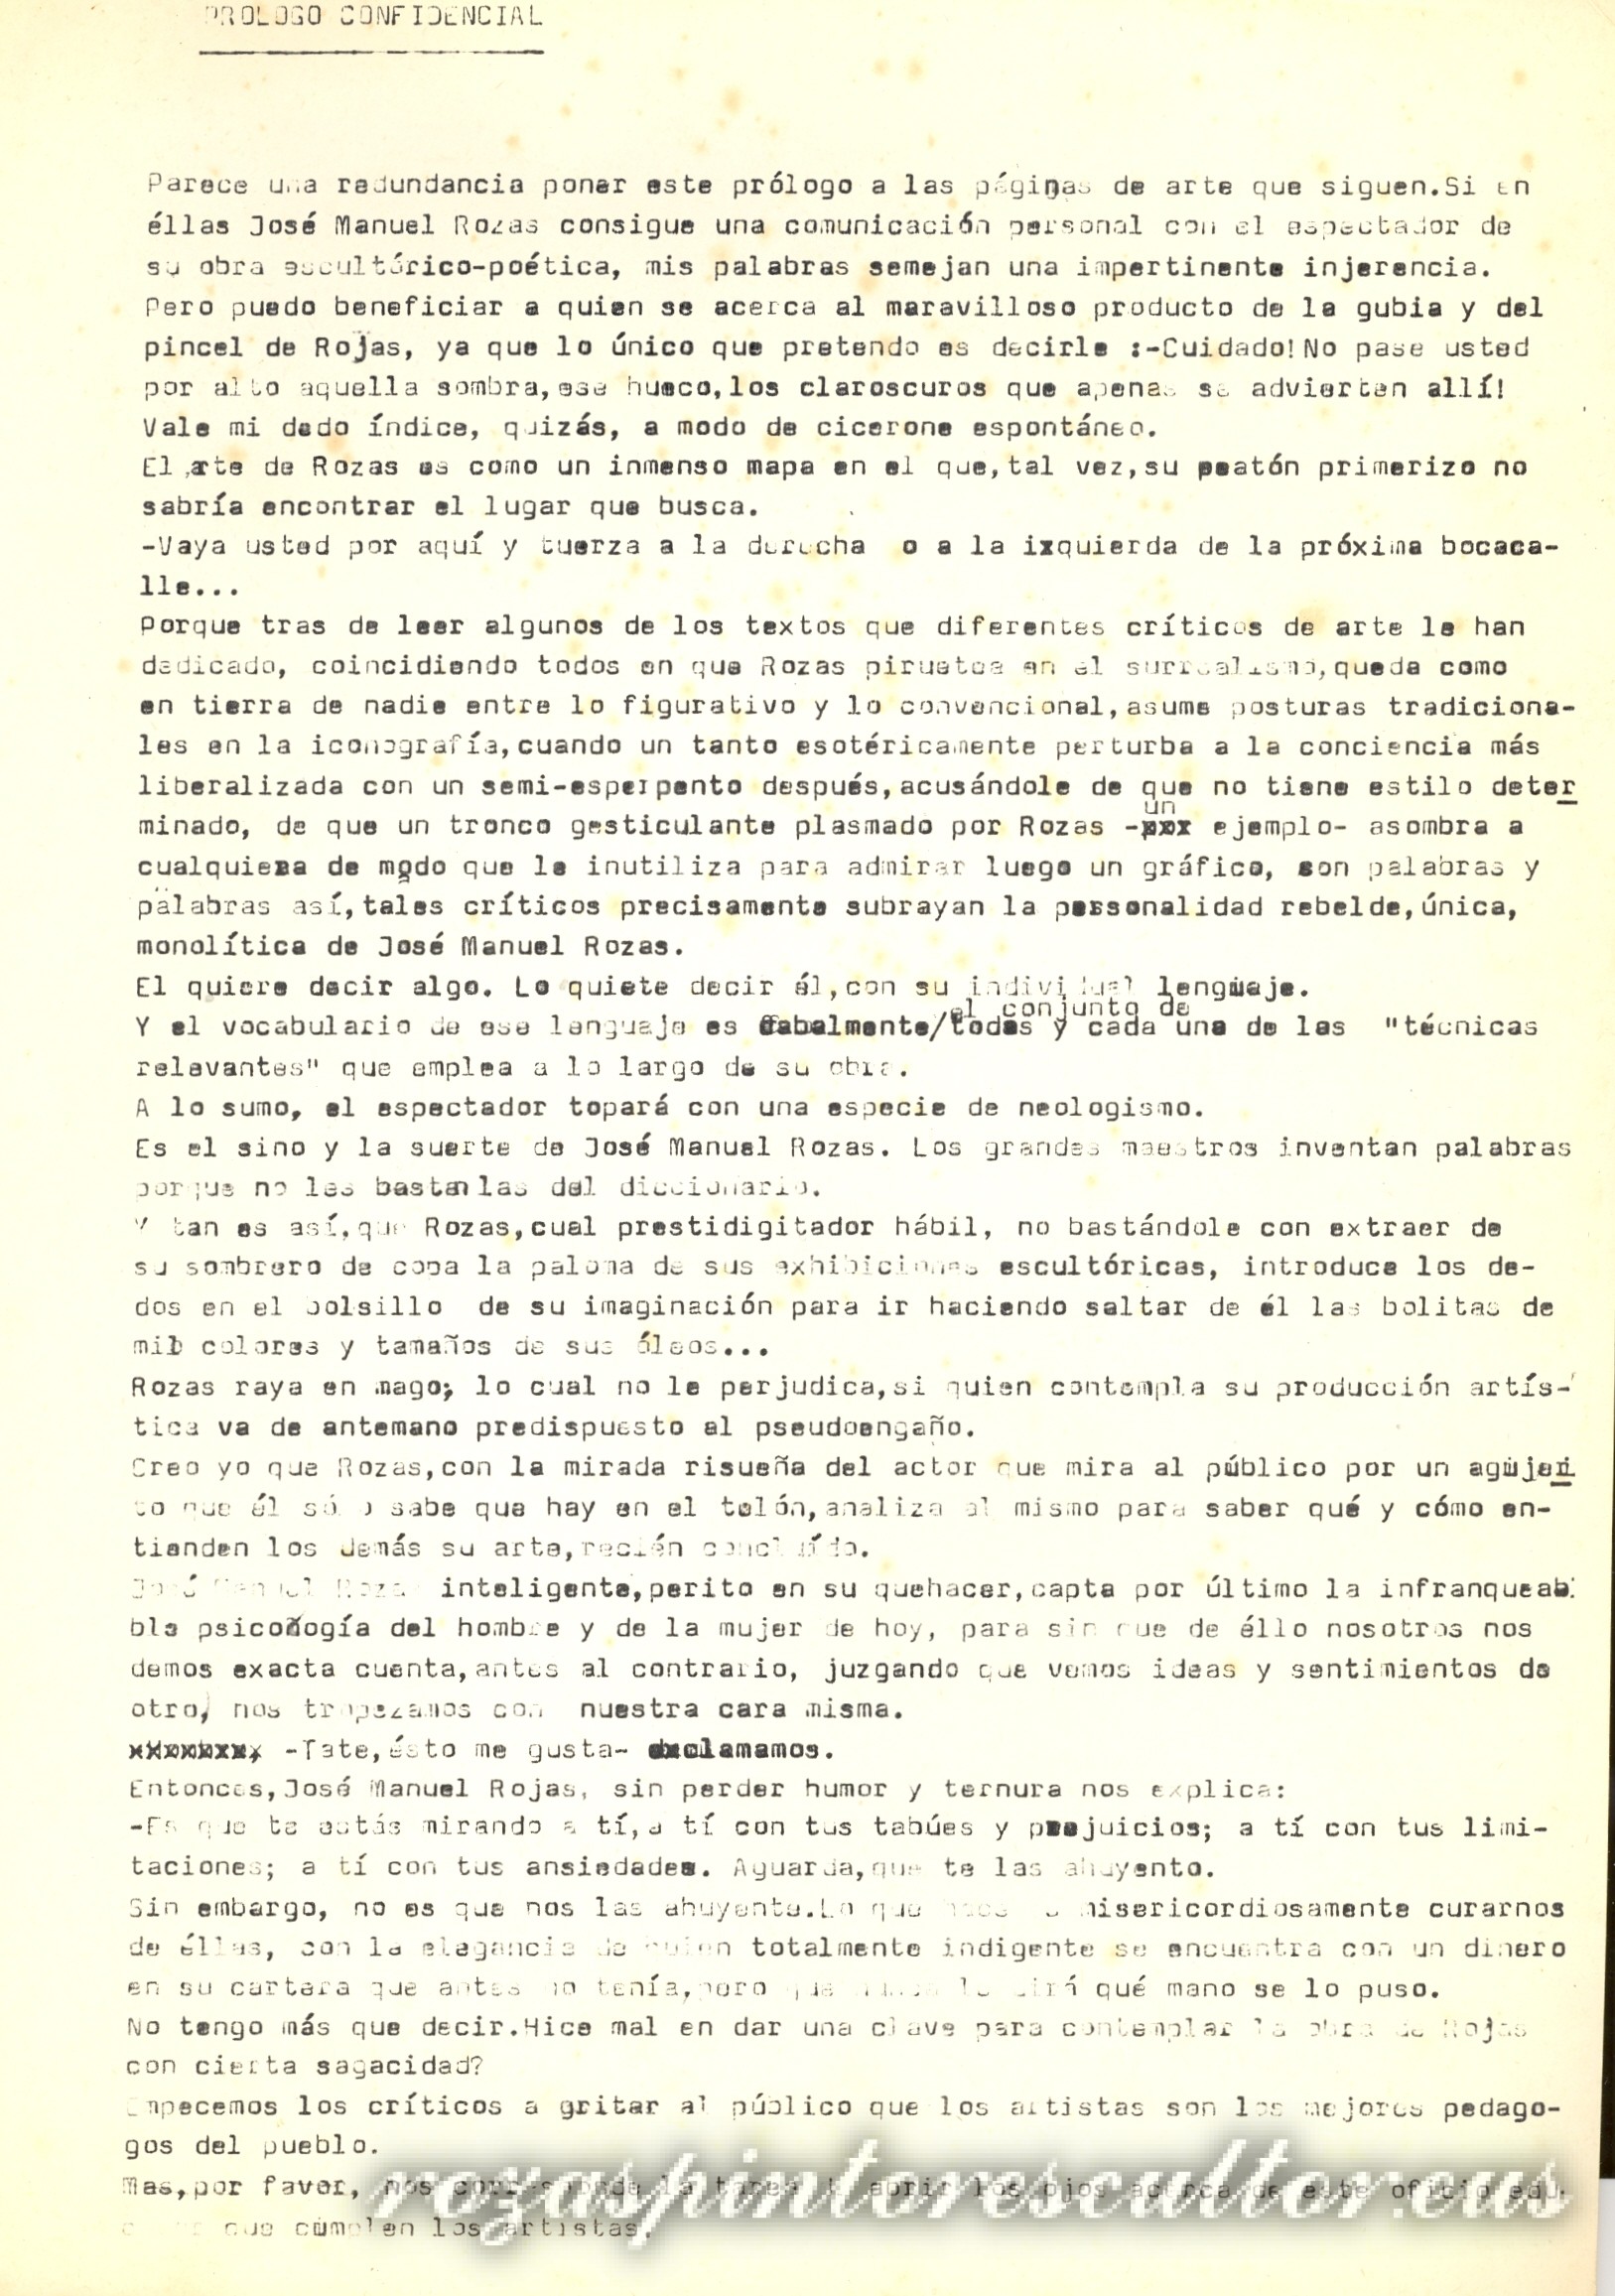 1981 Foreword Confidential – Jose Maria Bereciartua